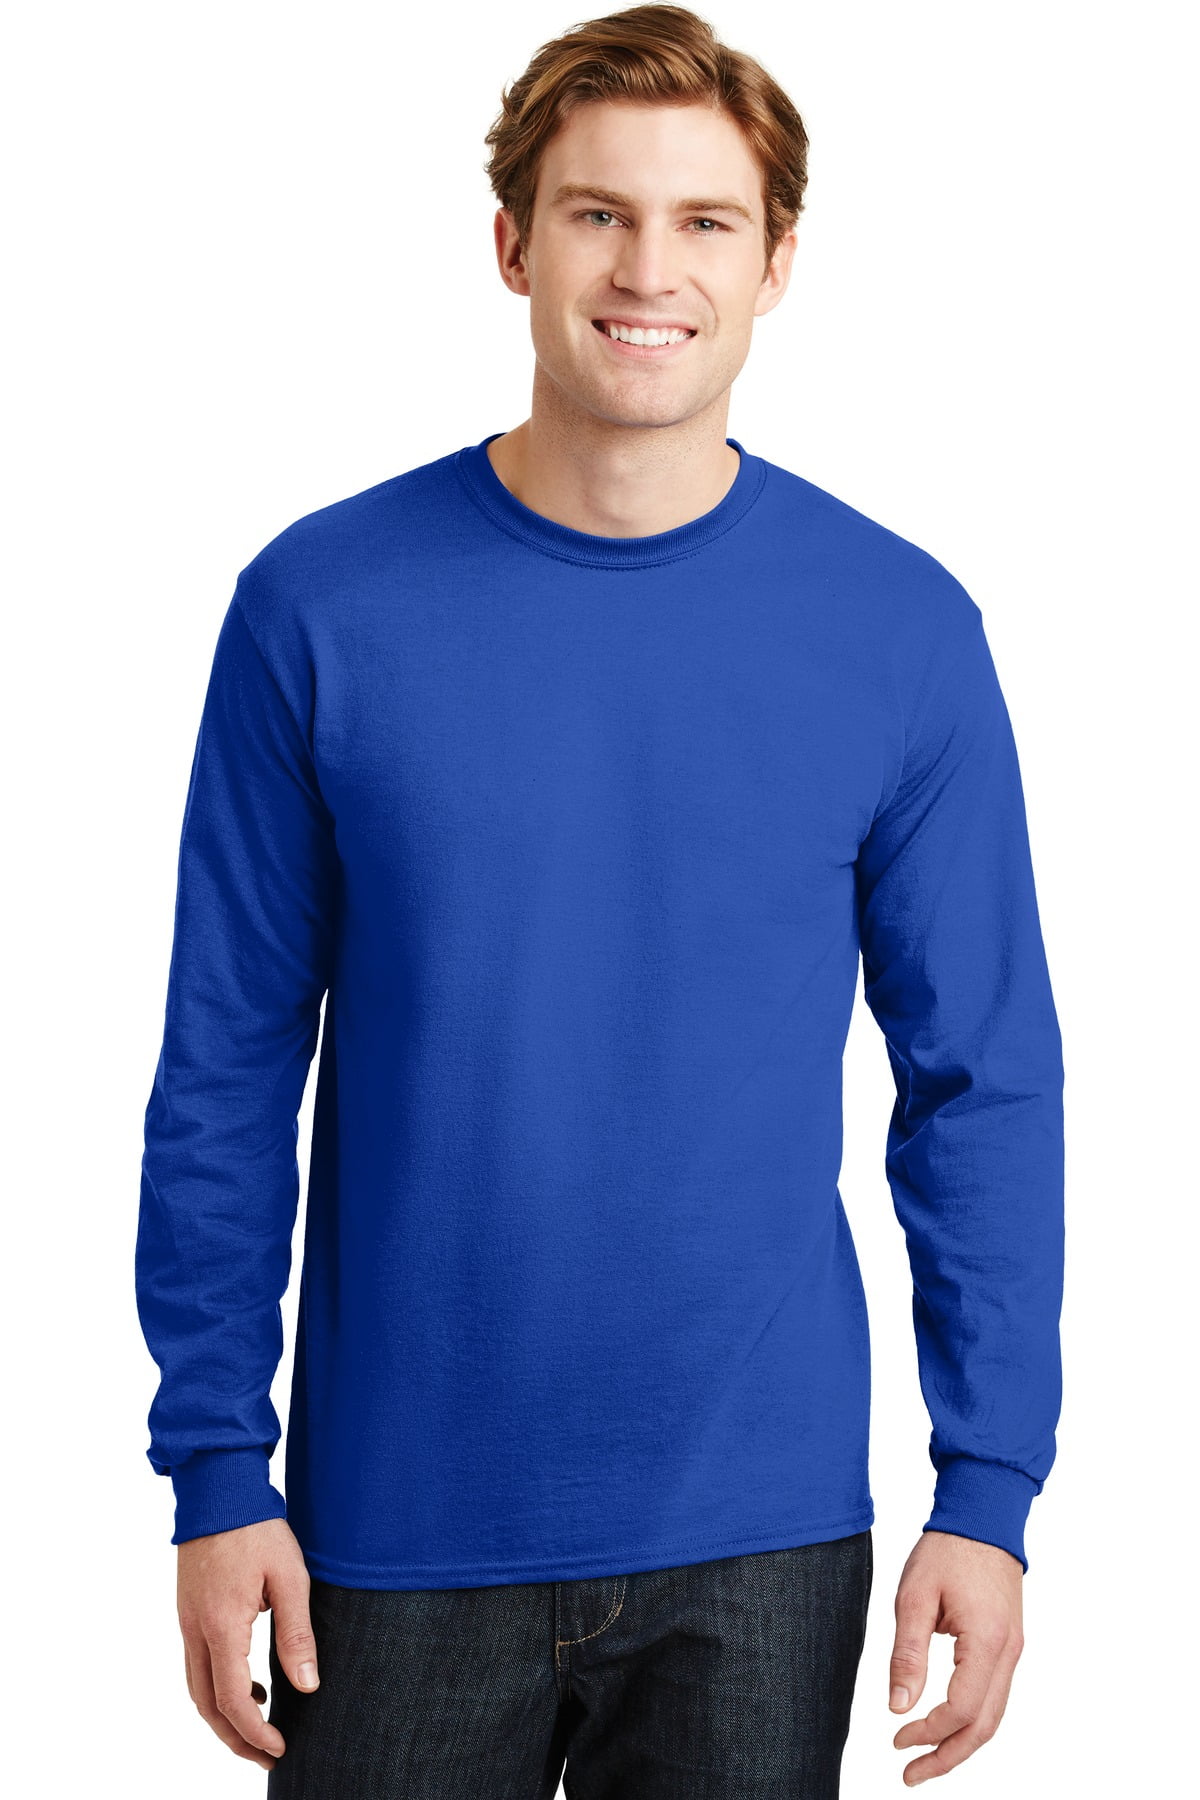 Cotton/50 50 DryBlend Poly Sleeve T-Shirt Long